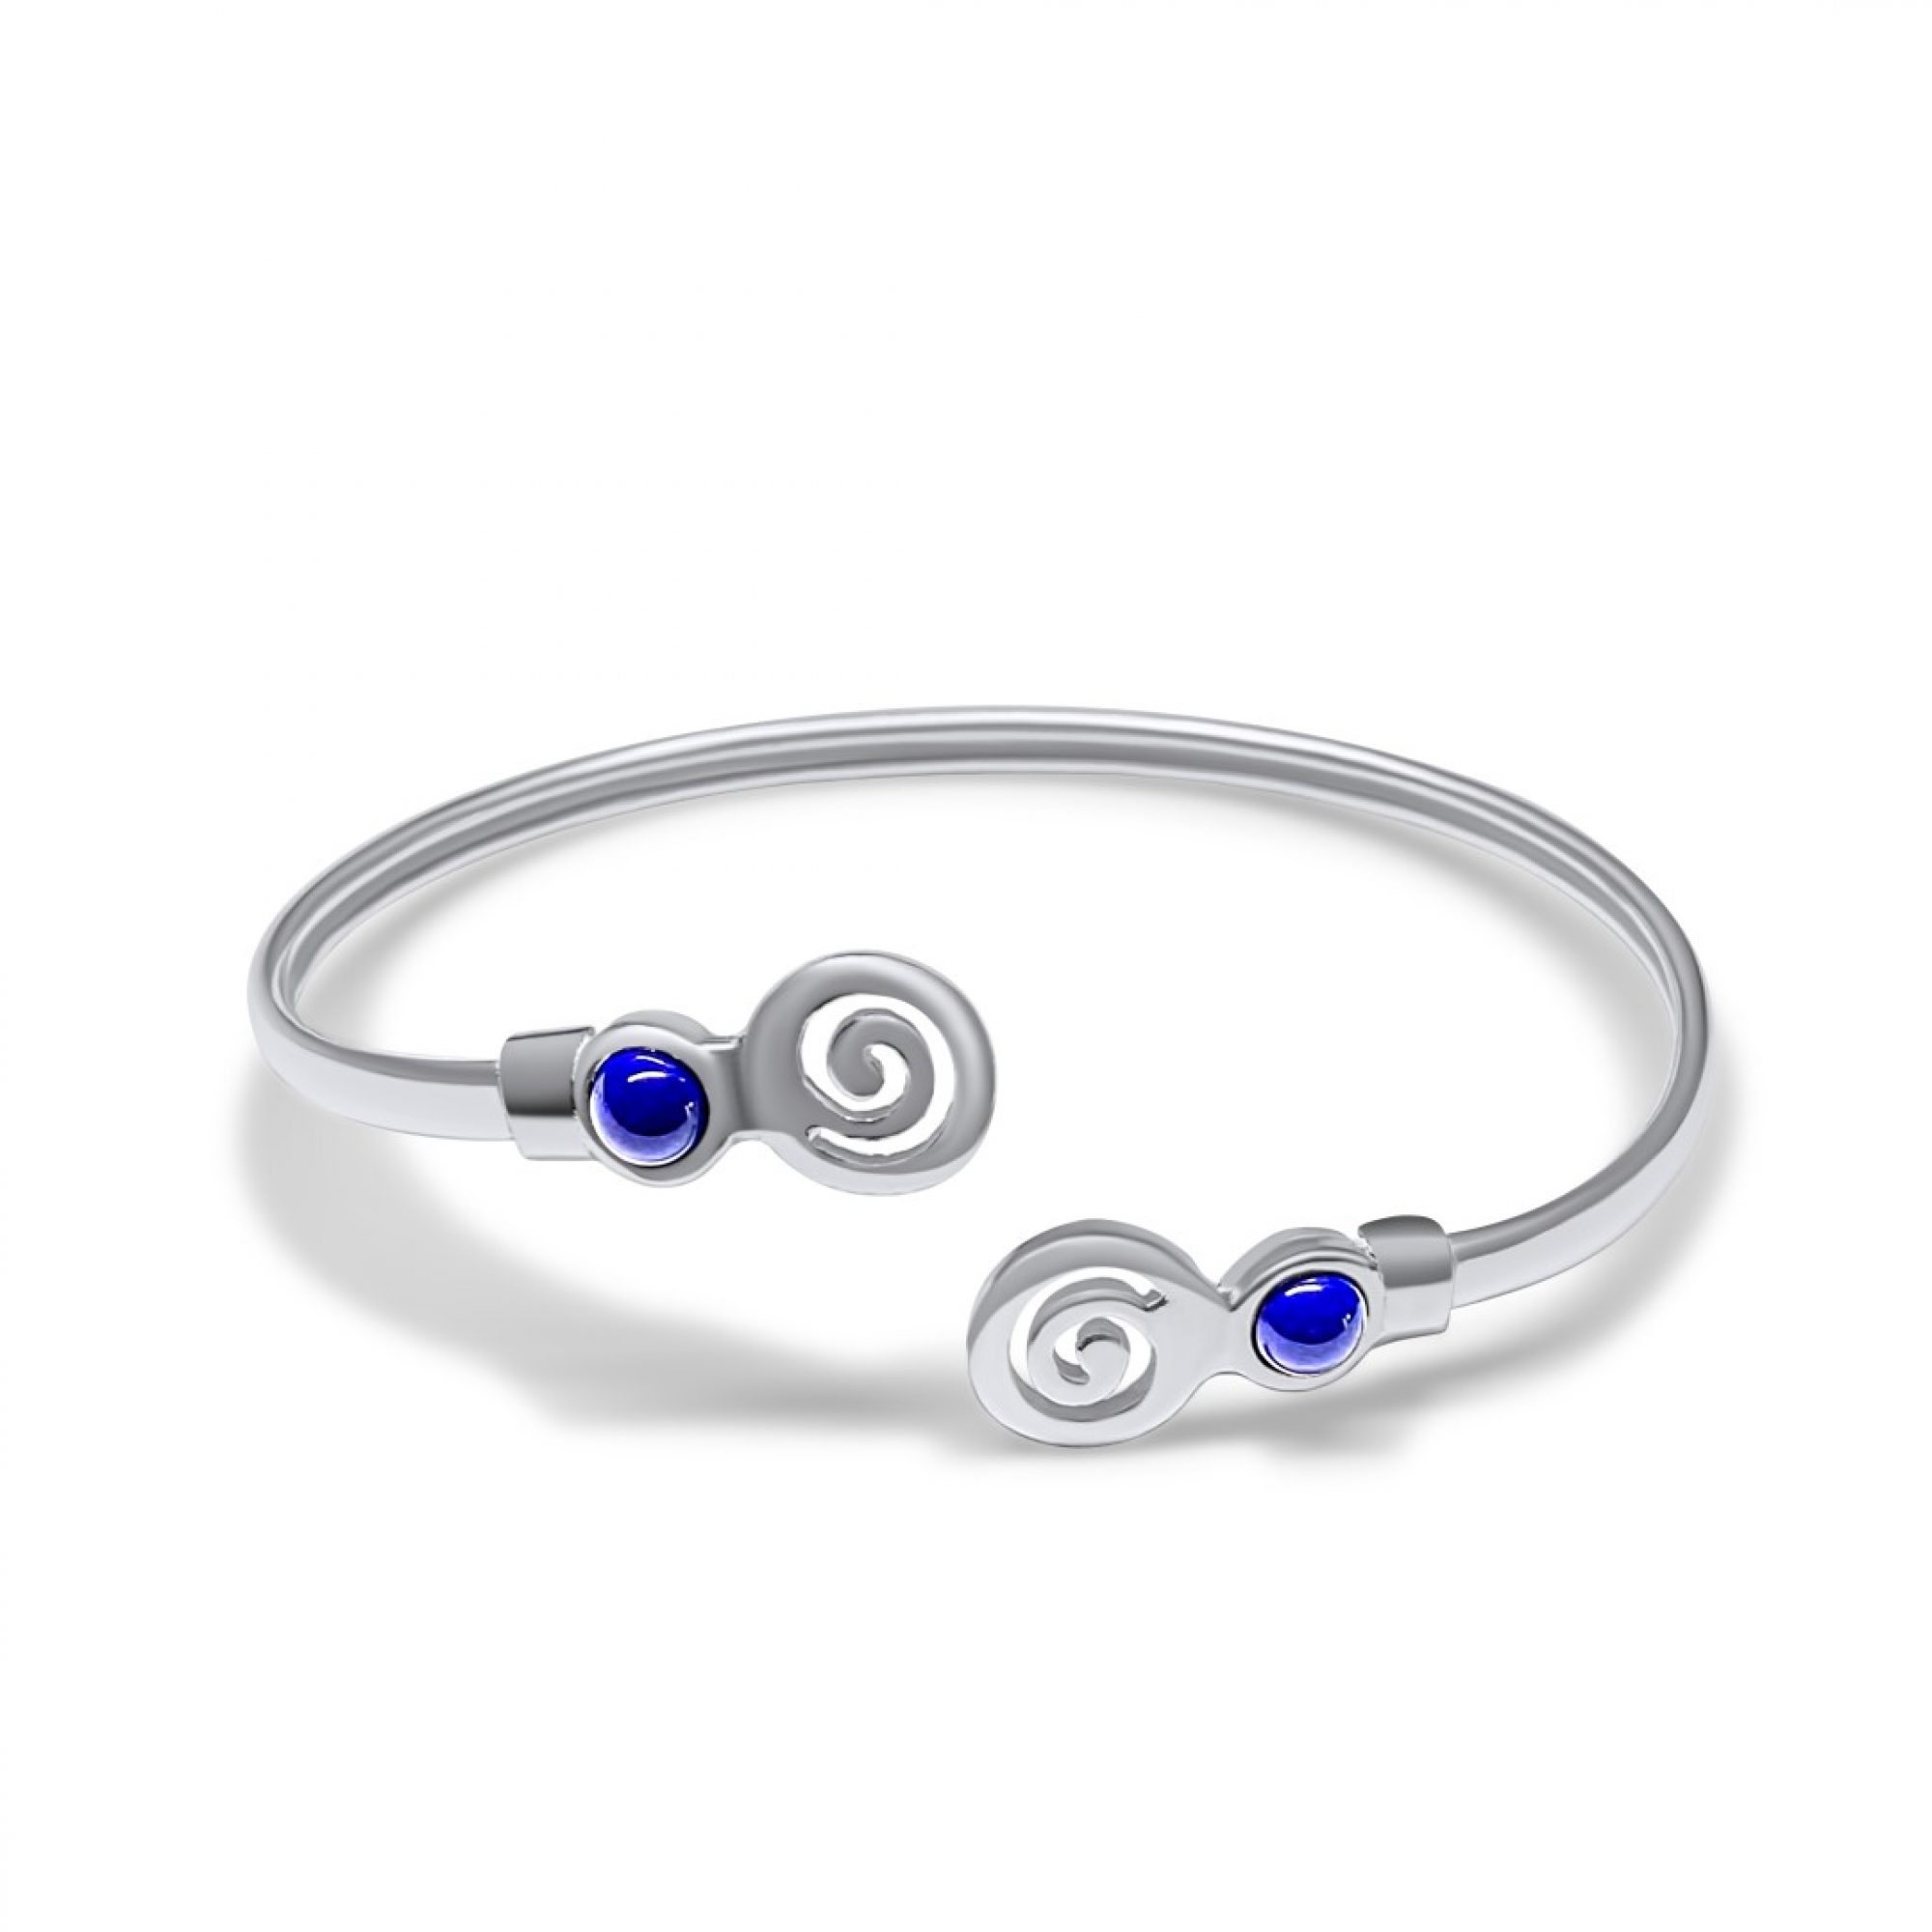 Adjustable meander bracelet with lapis lazuli stones